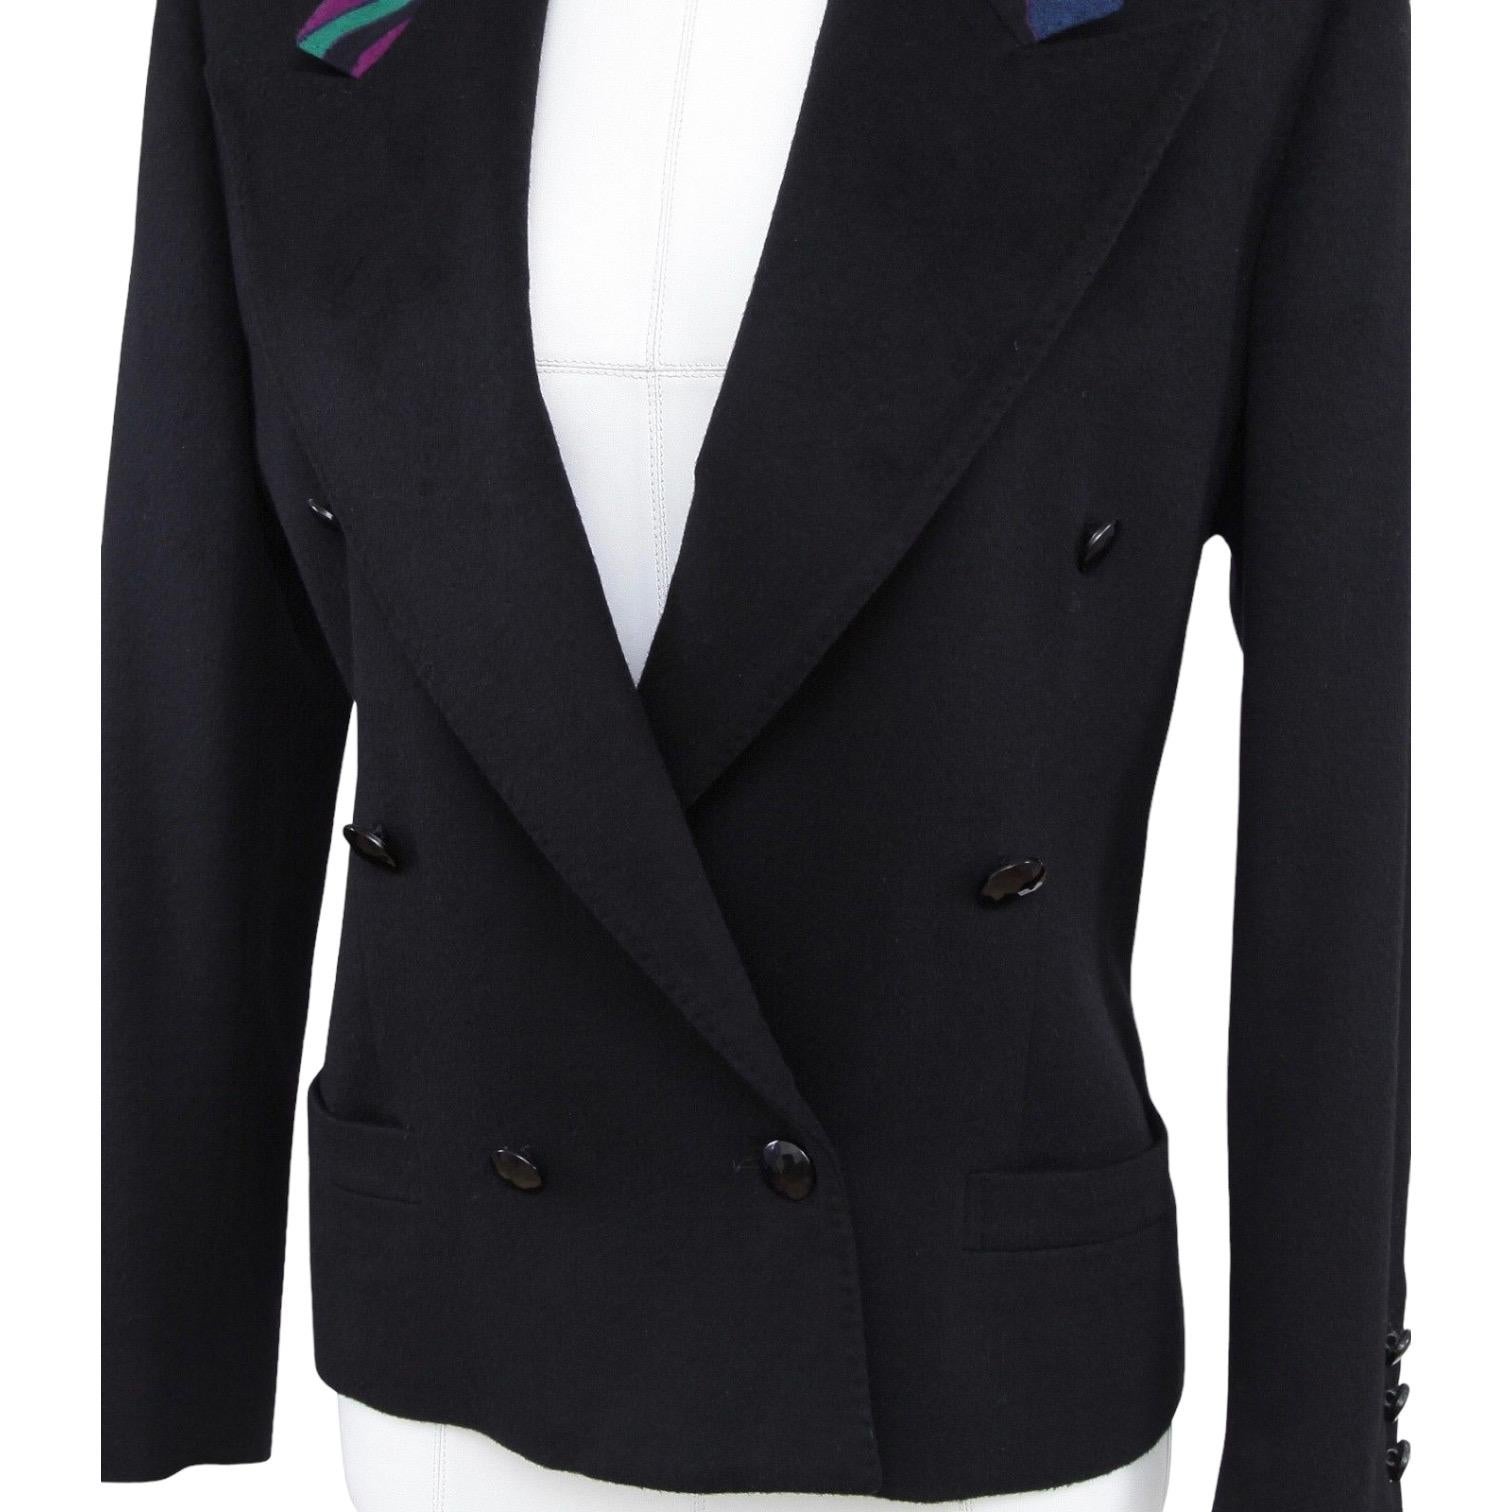 GIANNI VERSACE Jacket Blazer Double Breasted Wool Black Long Sleeve 4 38 VINTAGE For Sale 1